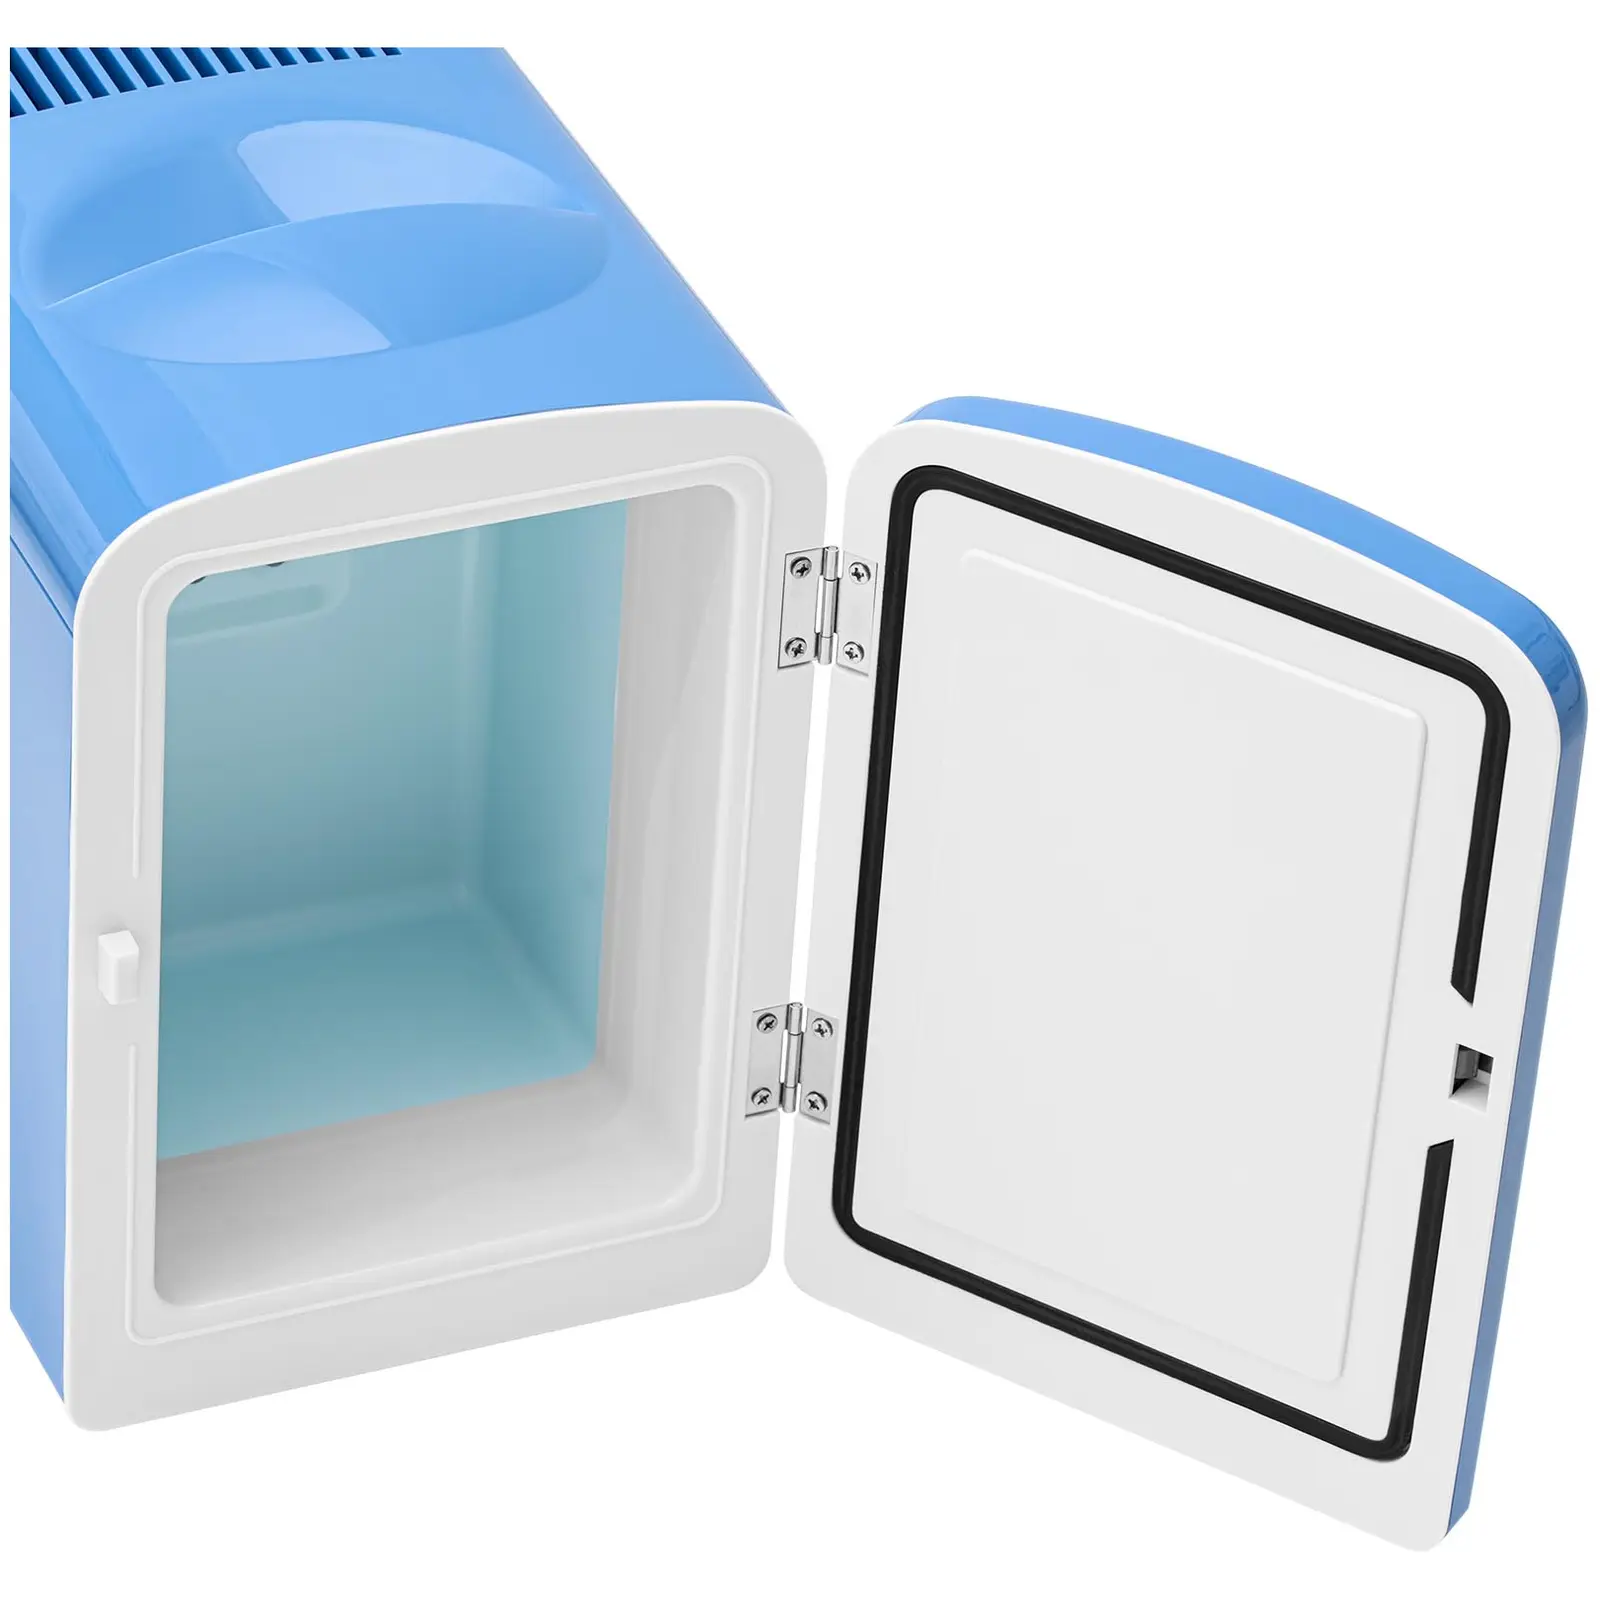 Mini-Kühlschrank 12 V / 230 V - 2-in-1-Gerät mit Warmhaltefunktion - 4 L - Blau